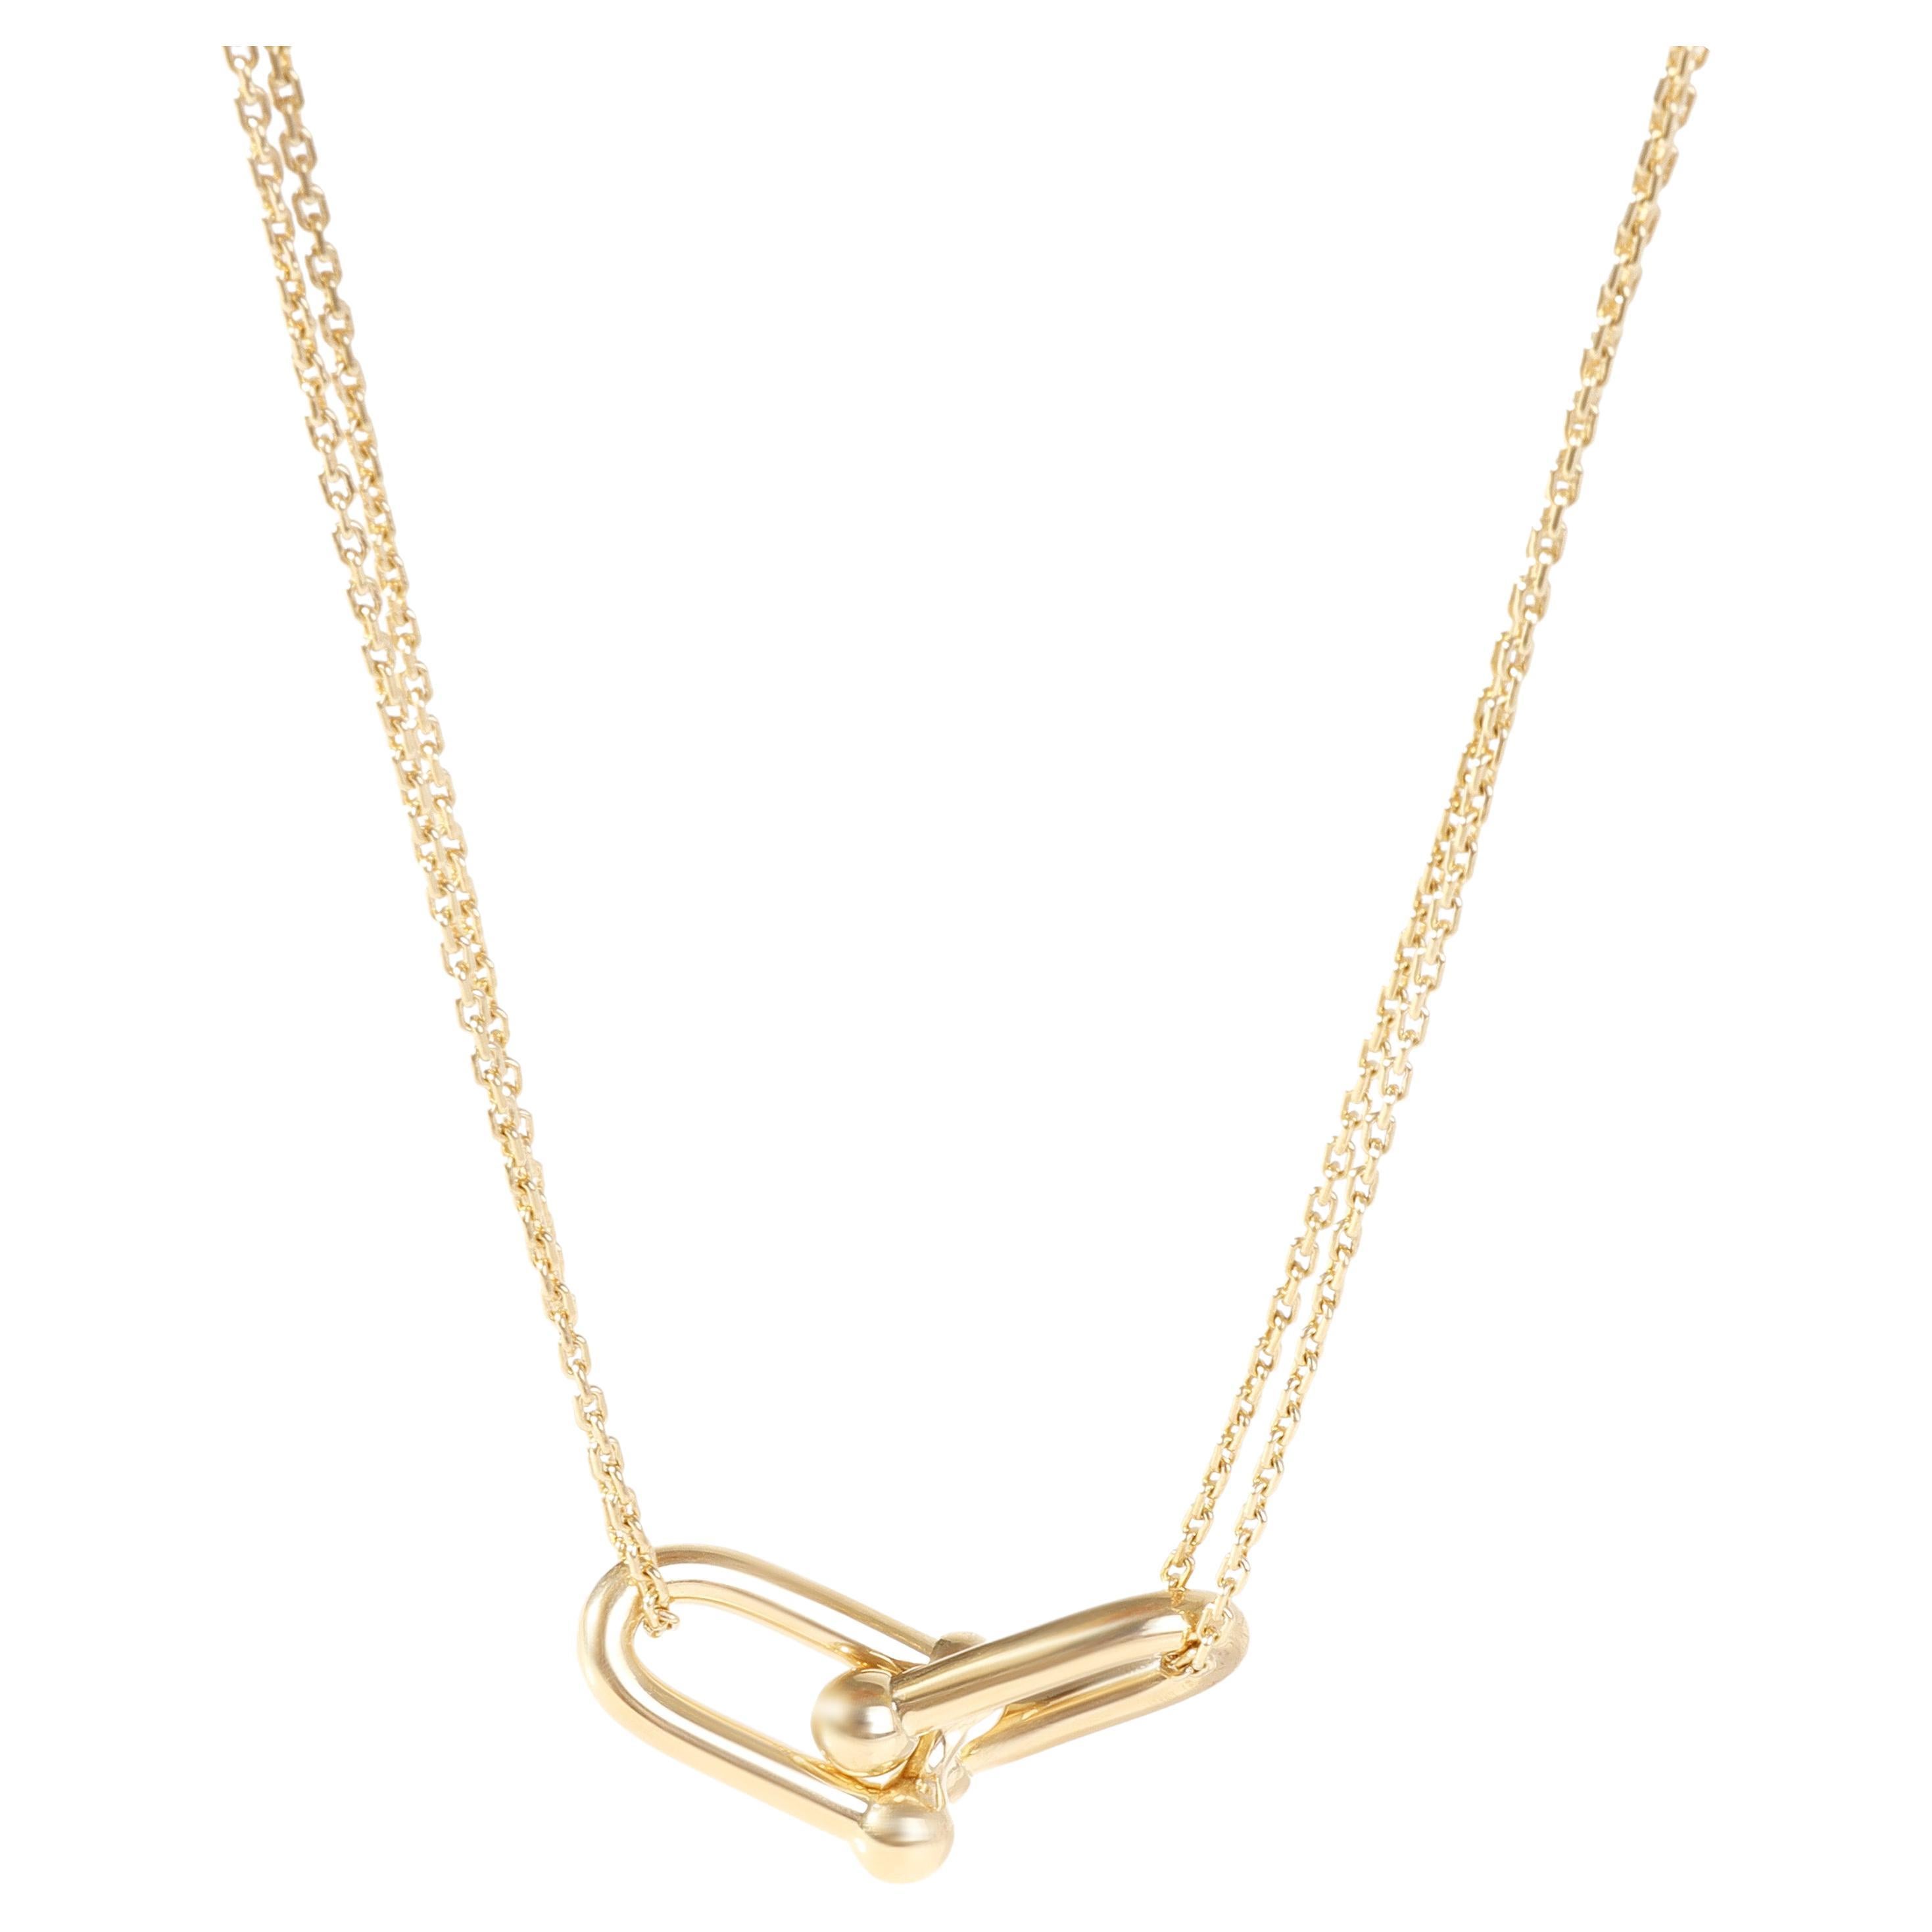 Tiffany & Co. Hardwear Necklace in 18K Yellow Gold